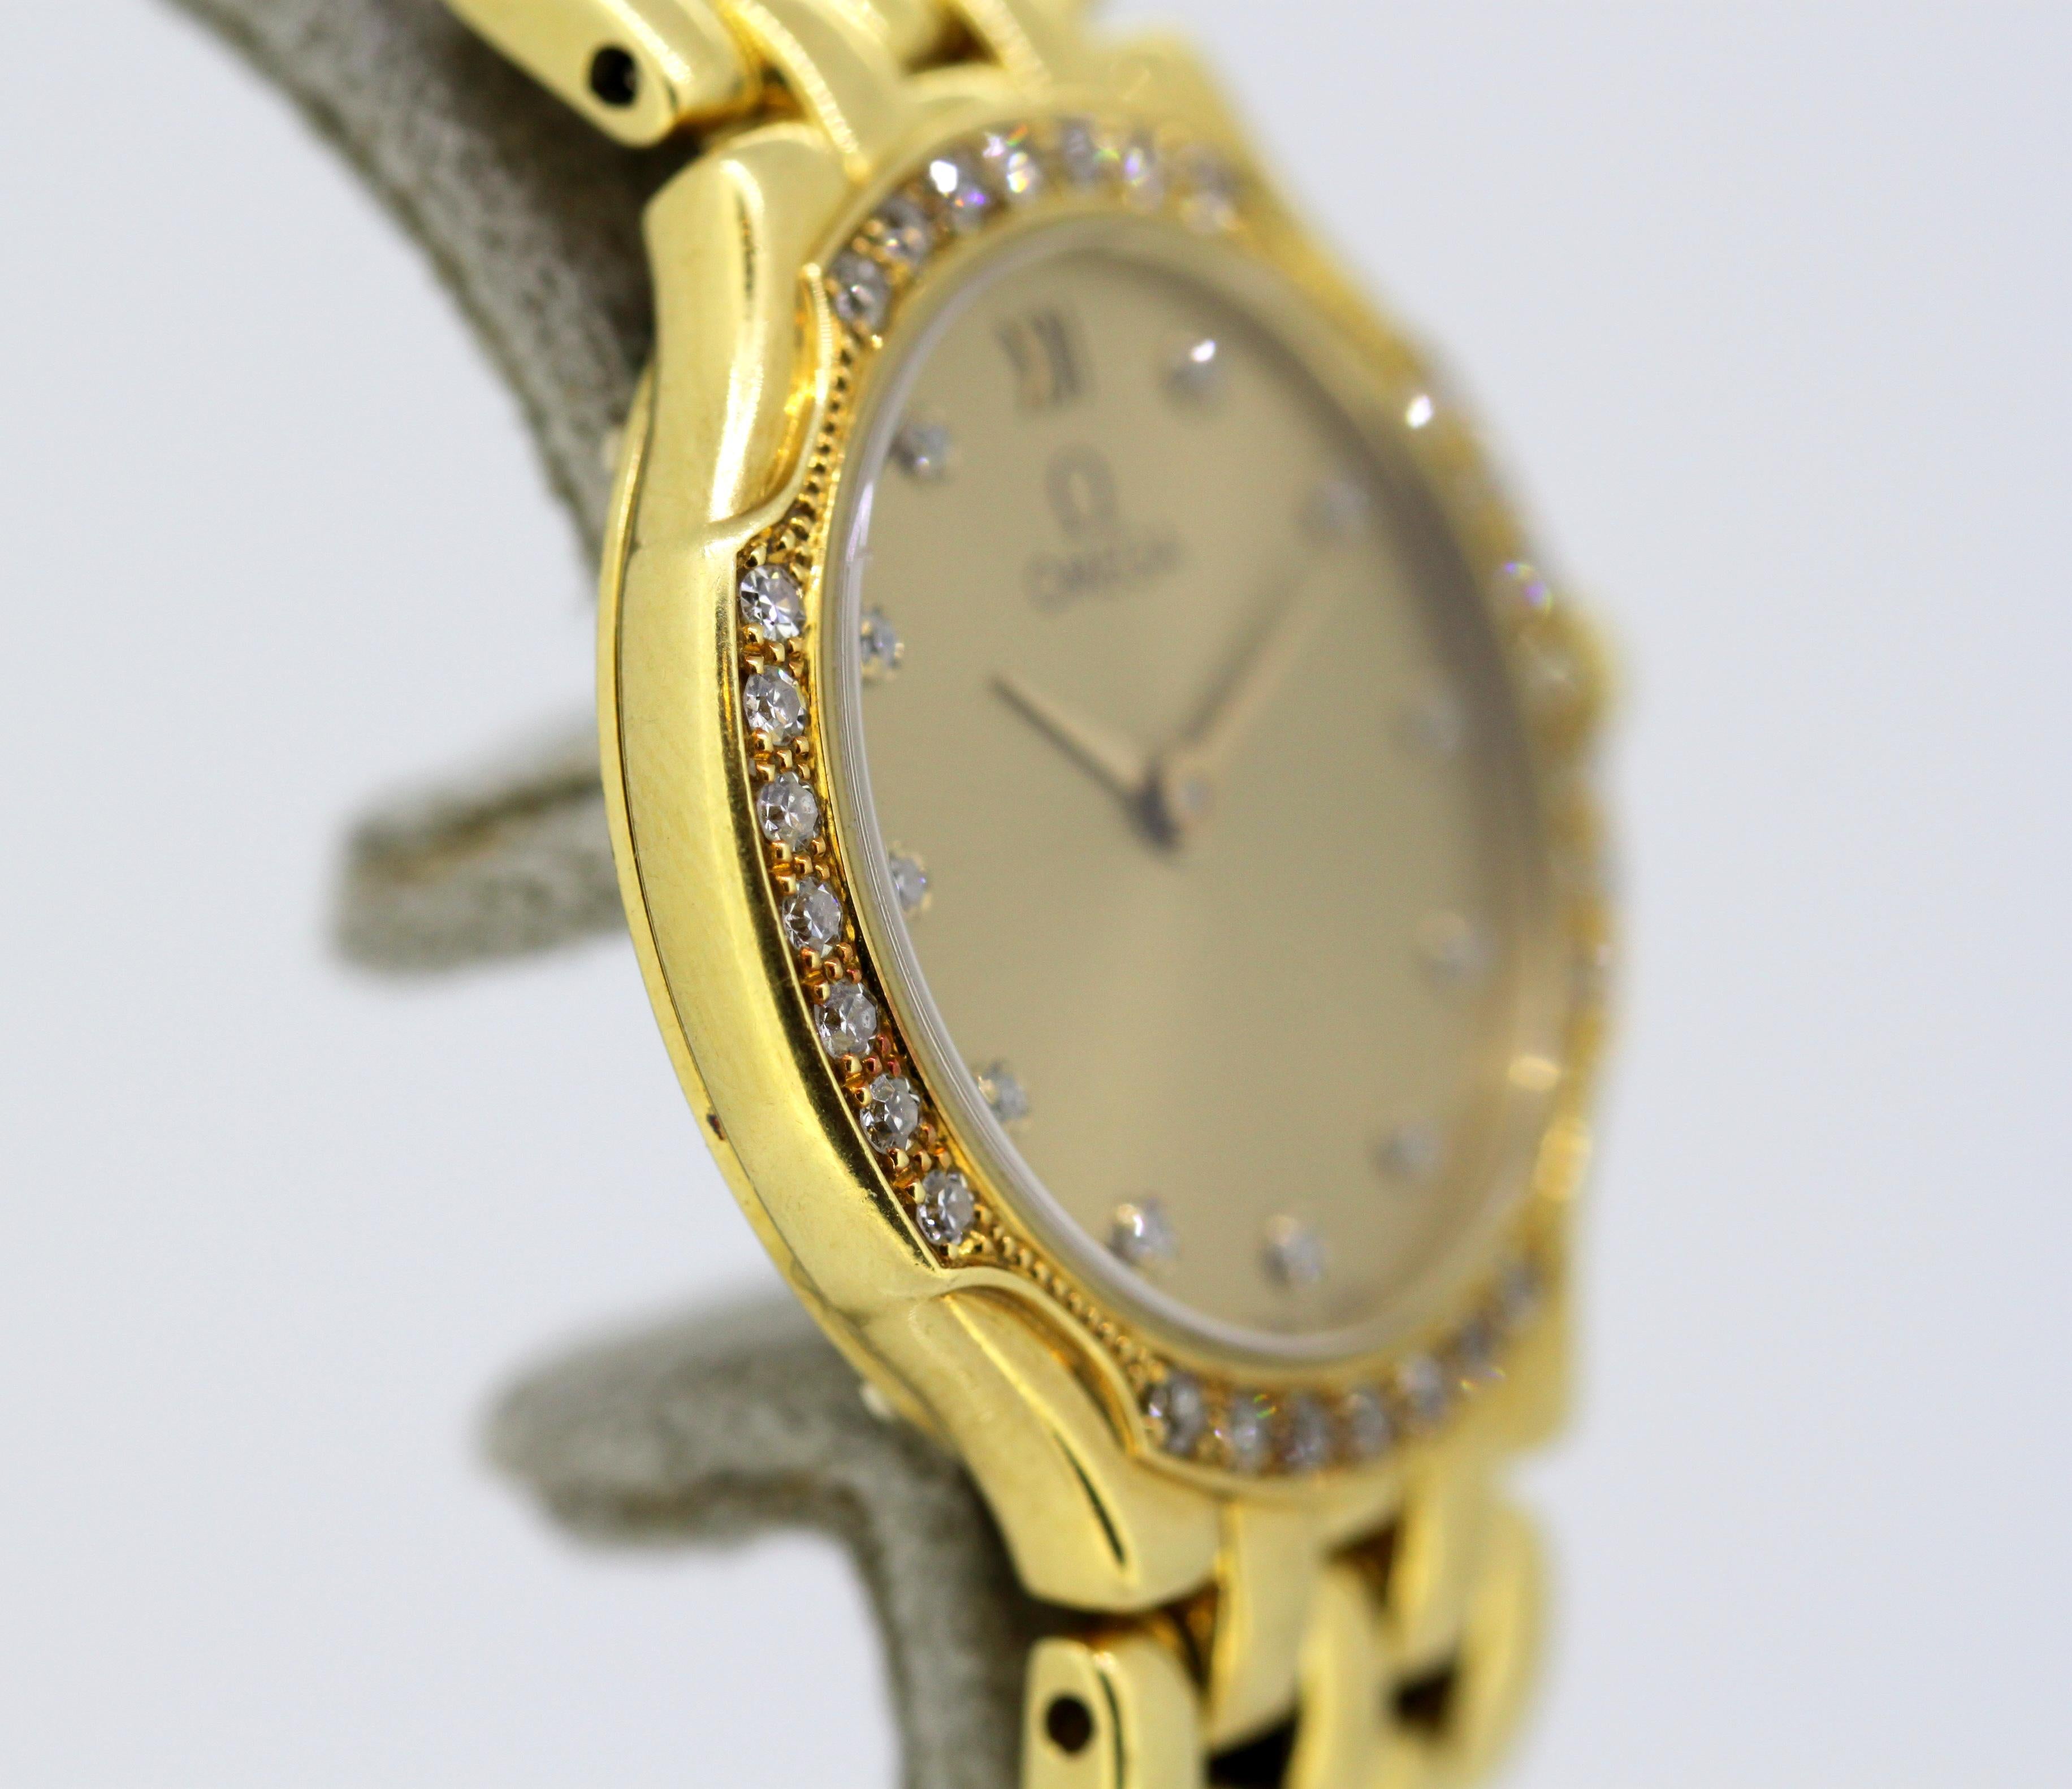 Ladies Omega wristwatch set in full 18k gold, diamond bezel & hour markers 4